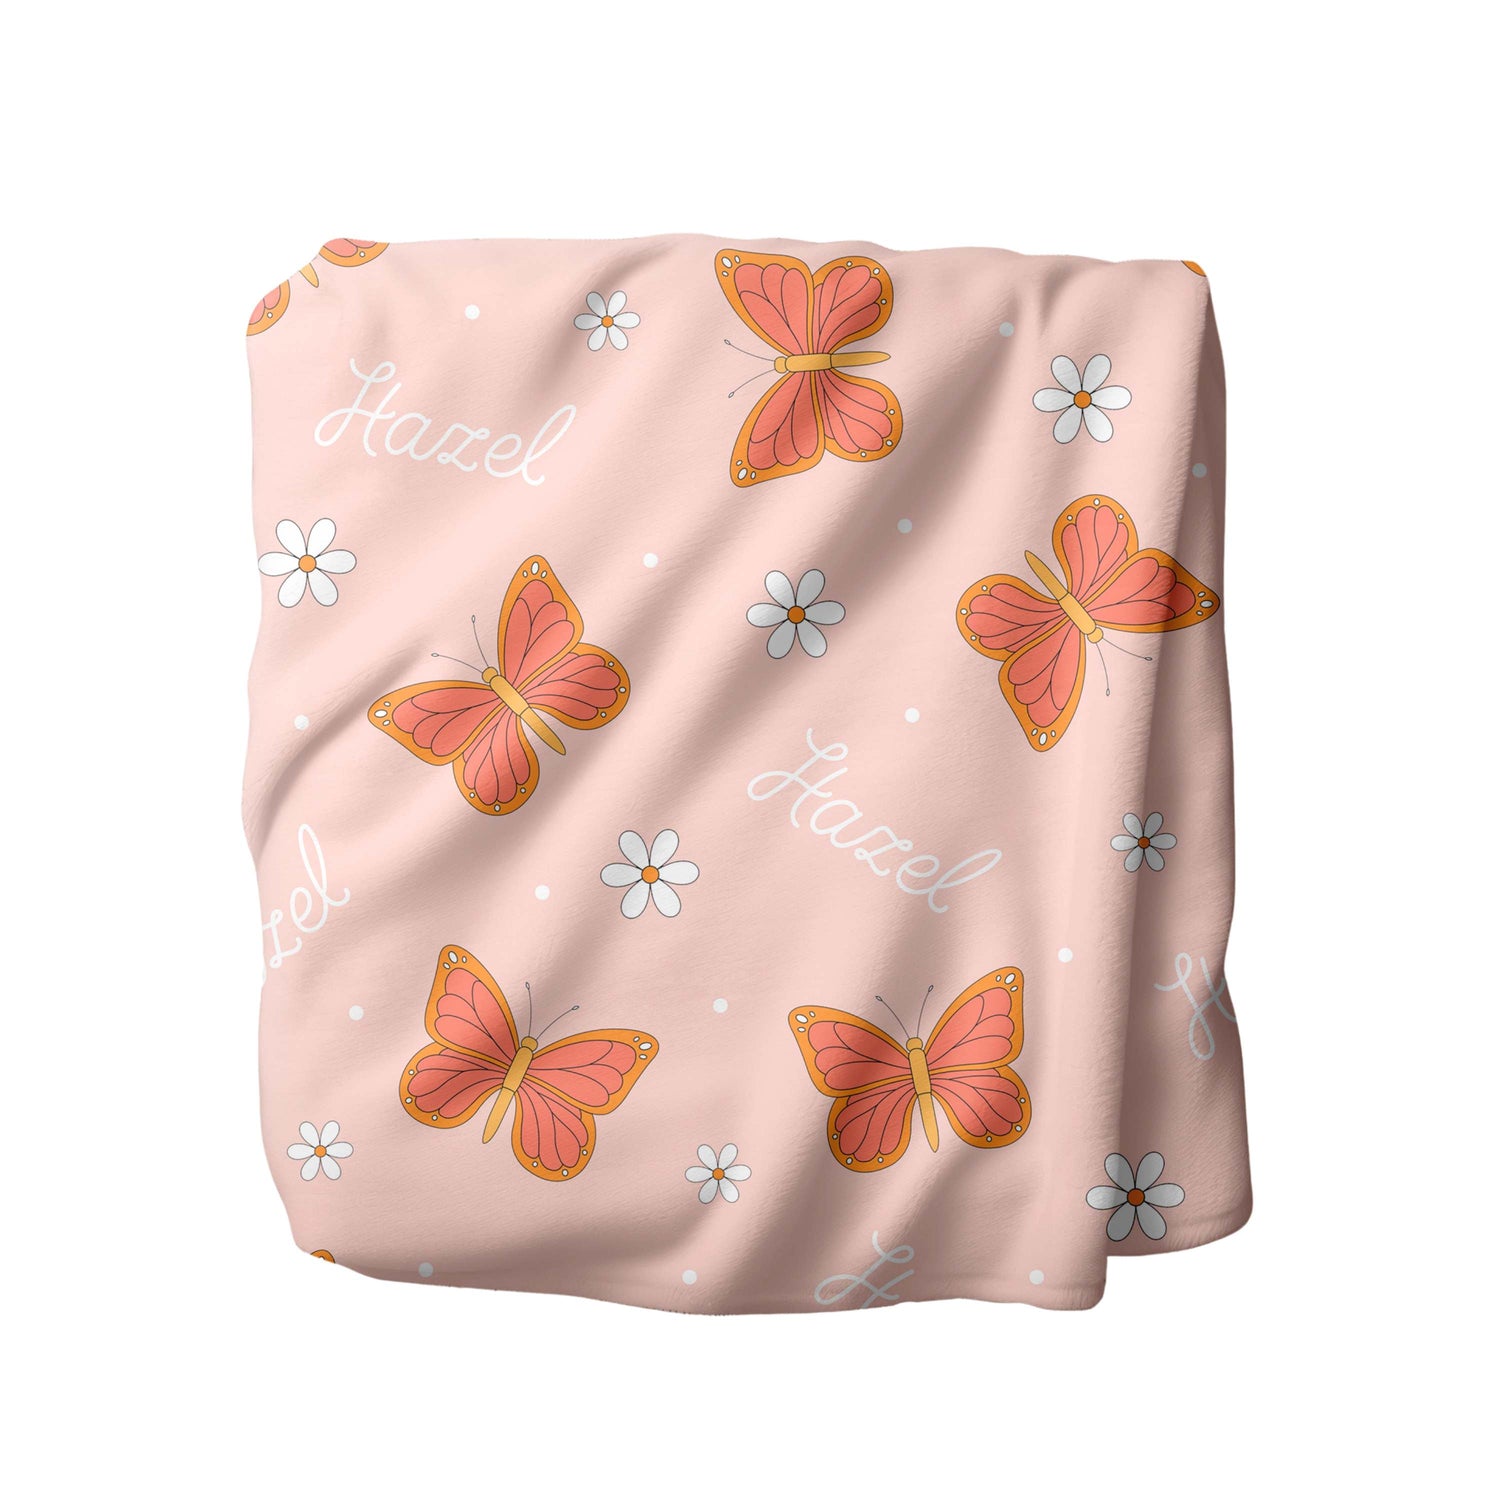 The Hazel Custom Blanket